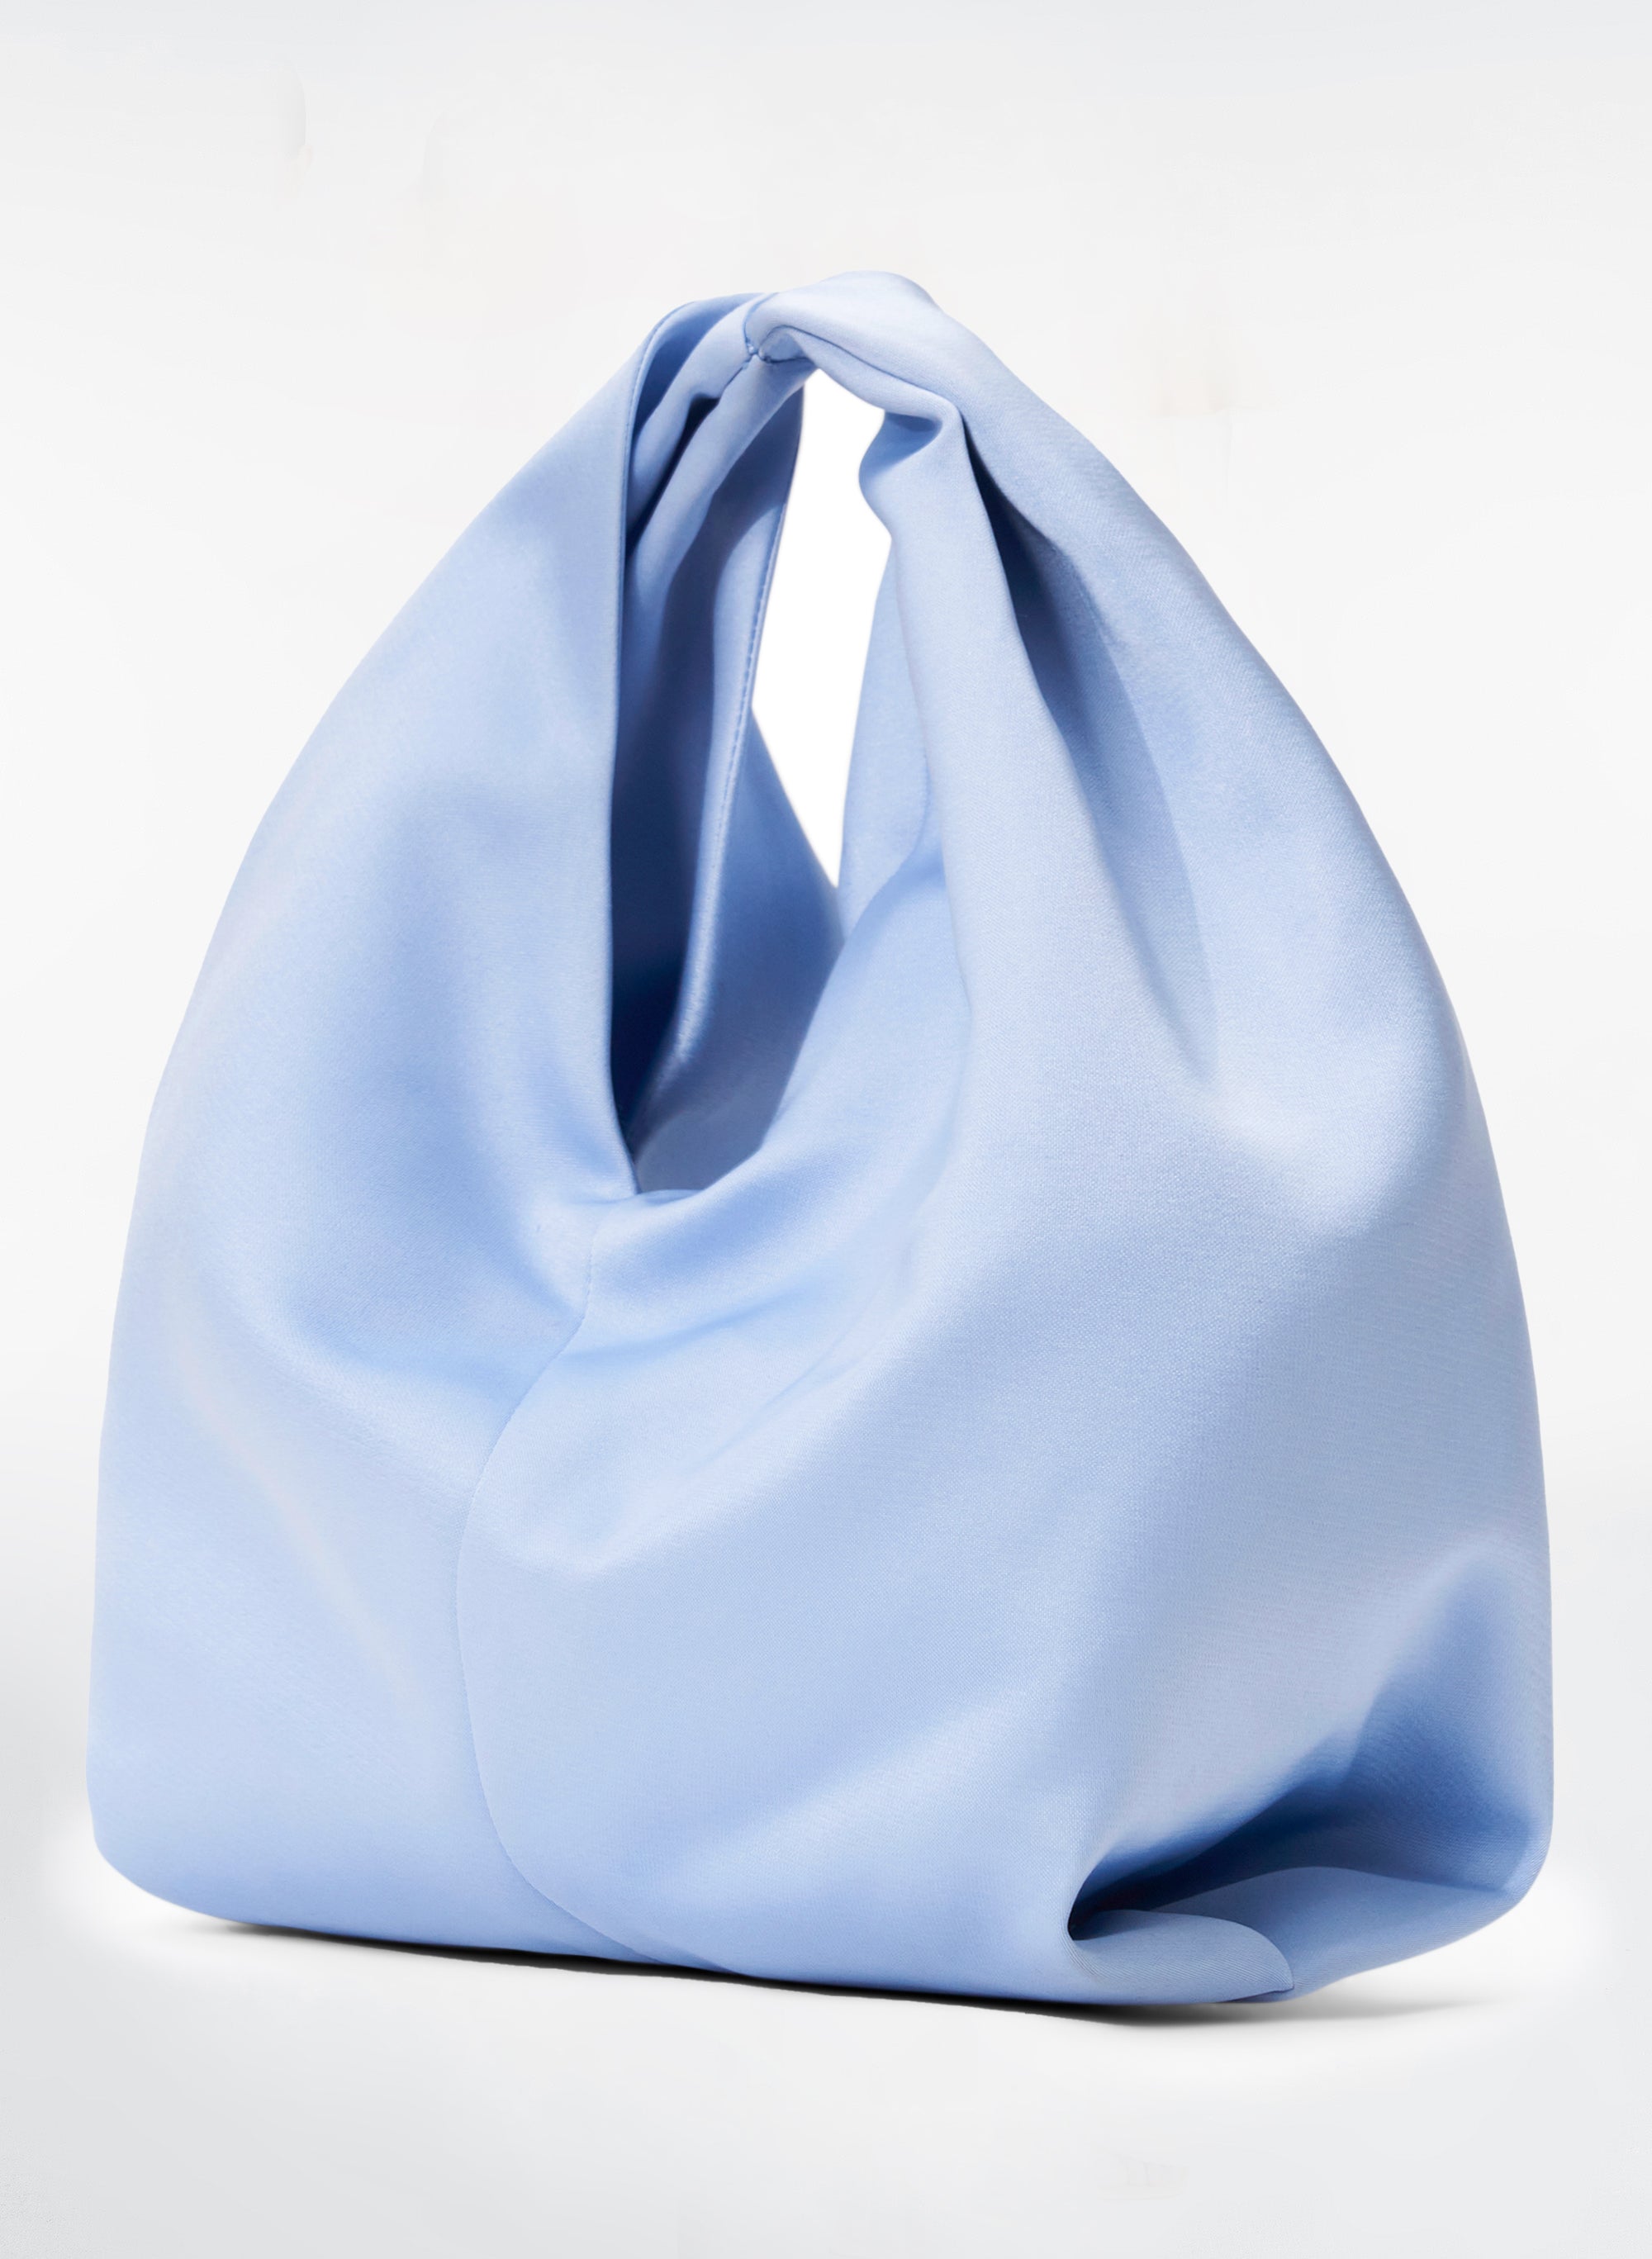 Buy PS PETITE SIMONE Shoulder Bag for Women 90s Retro Classic Clutch  Shoulder Tote Handbag Vintage Y2K Purse, A-white at Amazon.in